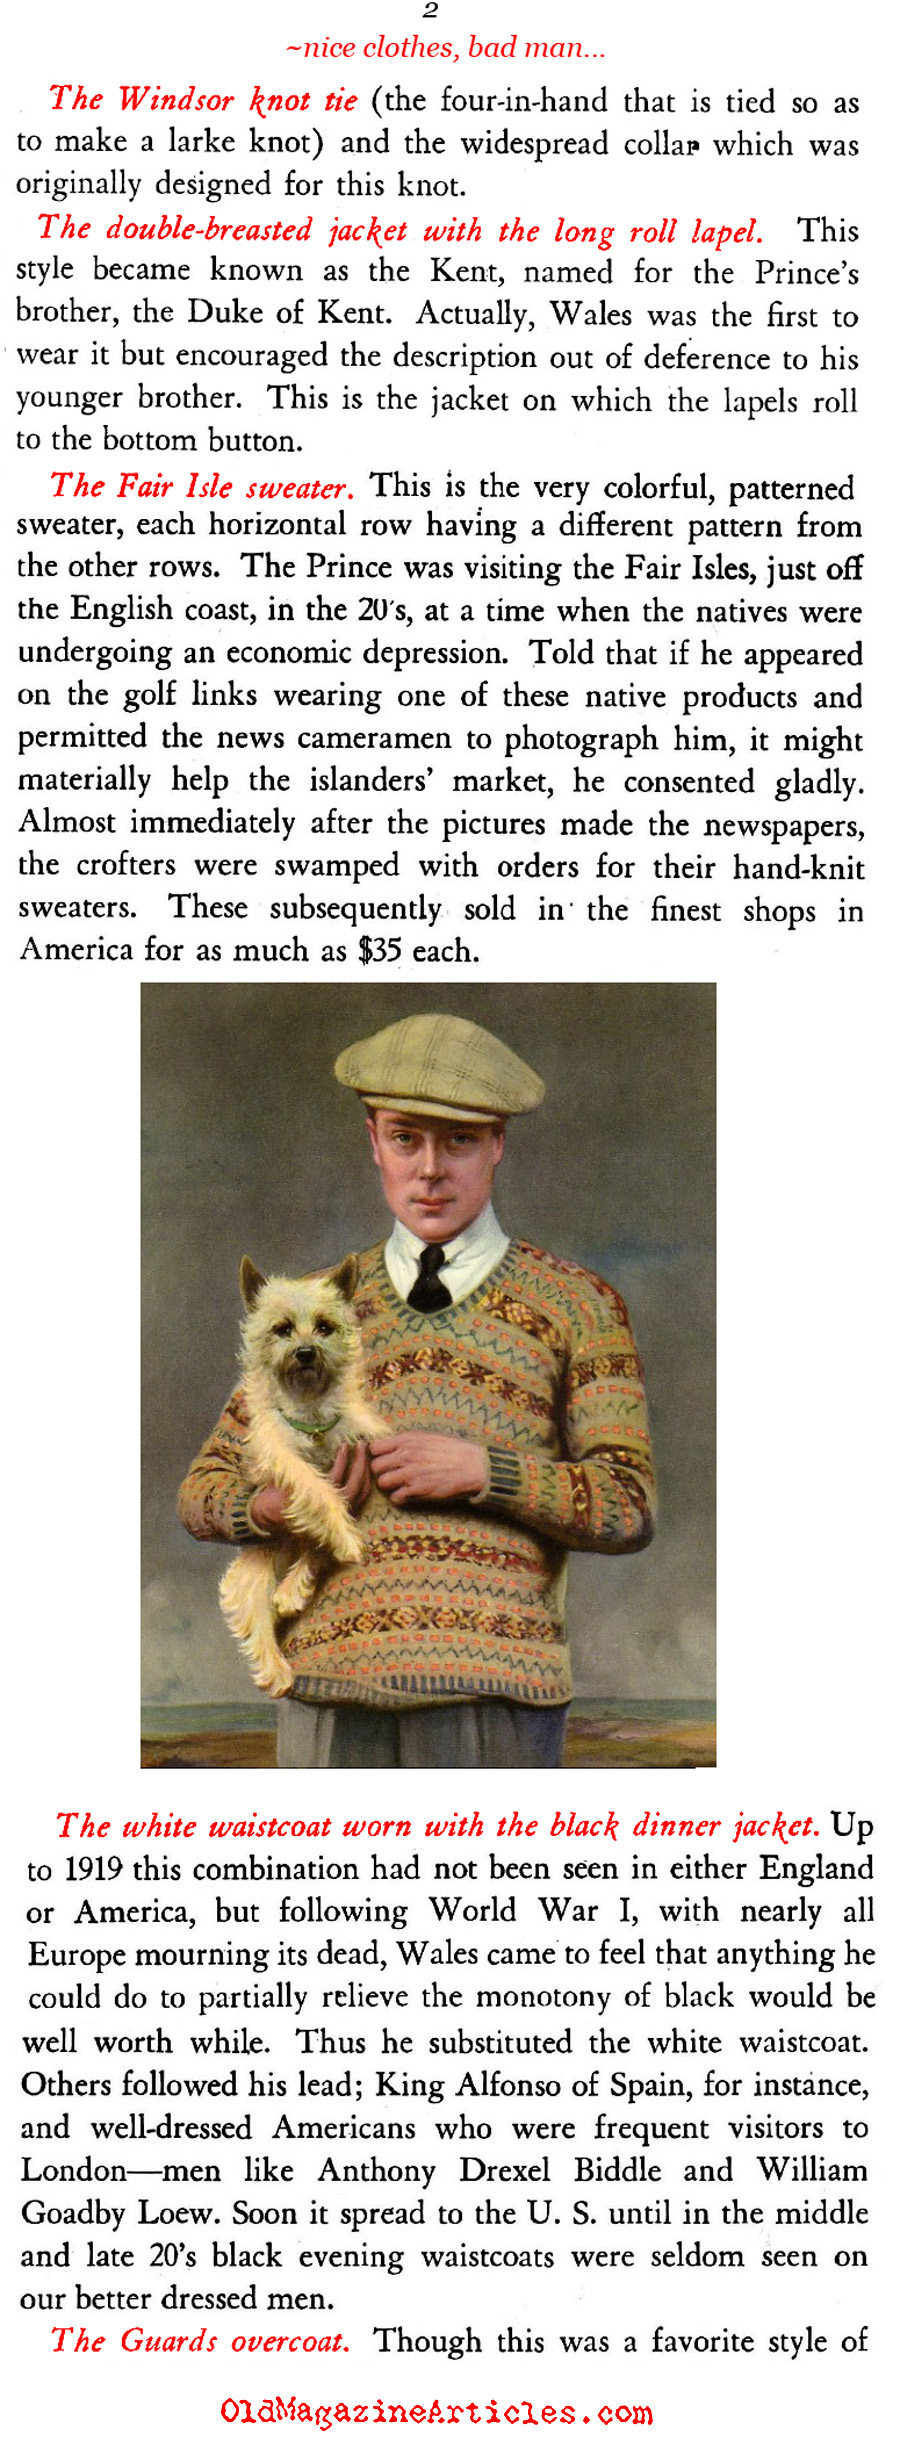 His Fashion Influence (Men's Wear, 1950)